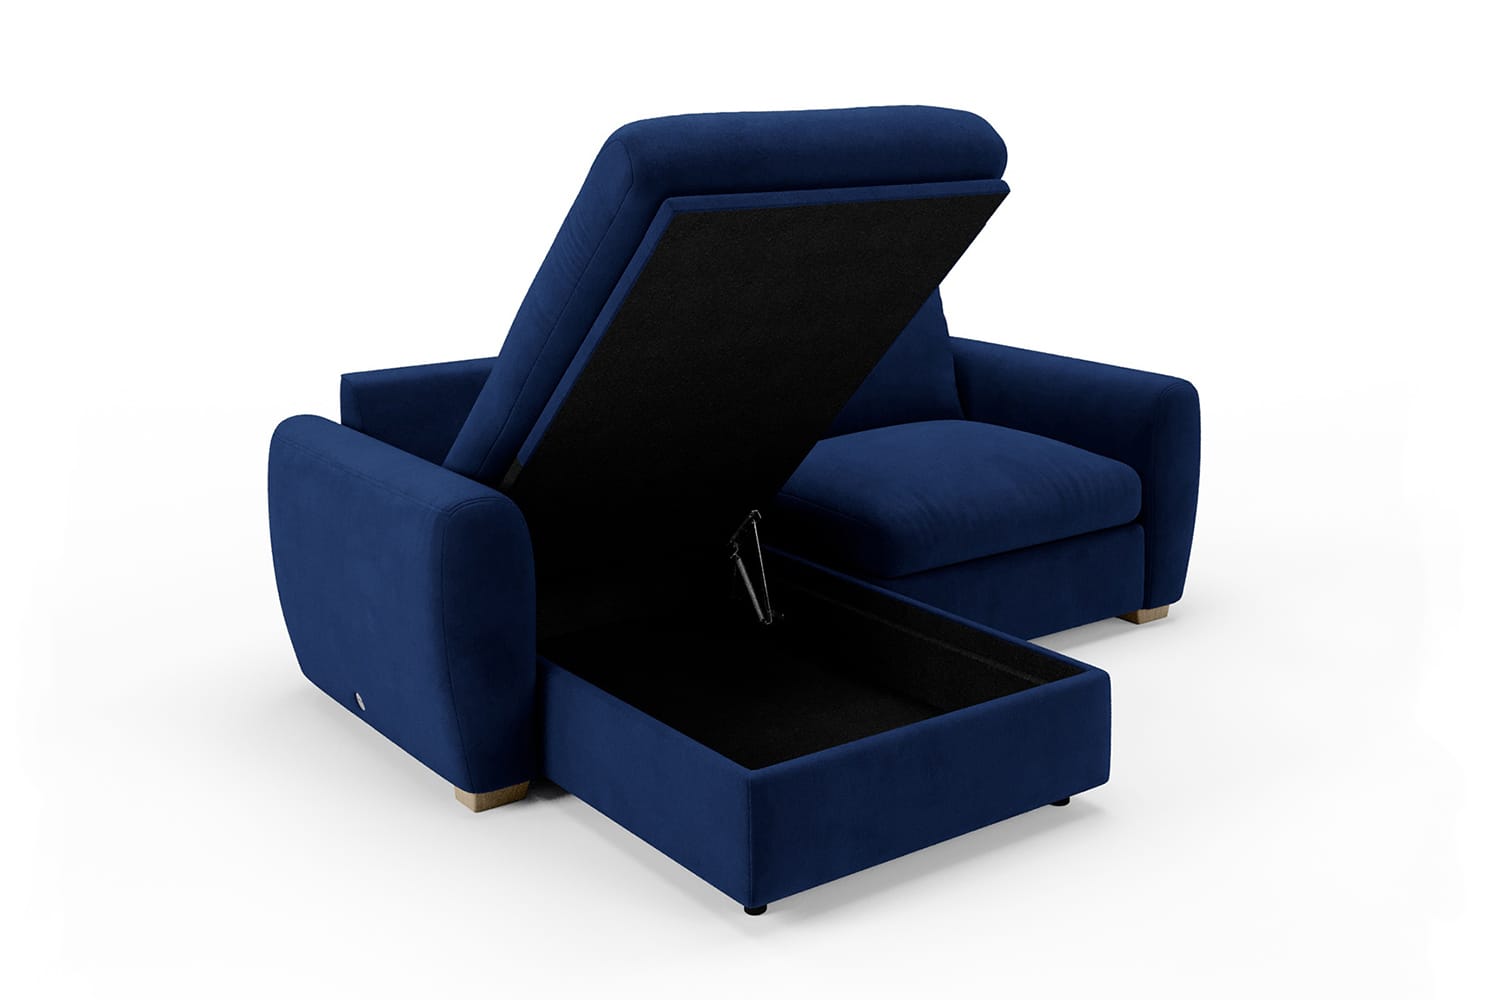 SNUG | The Cloud Sundae Chaise Corner Sofa in Midnight Blue variant_40414969790512